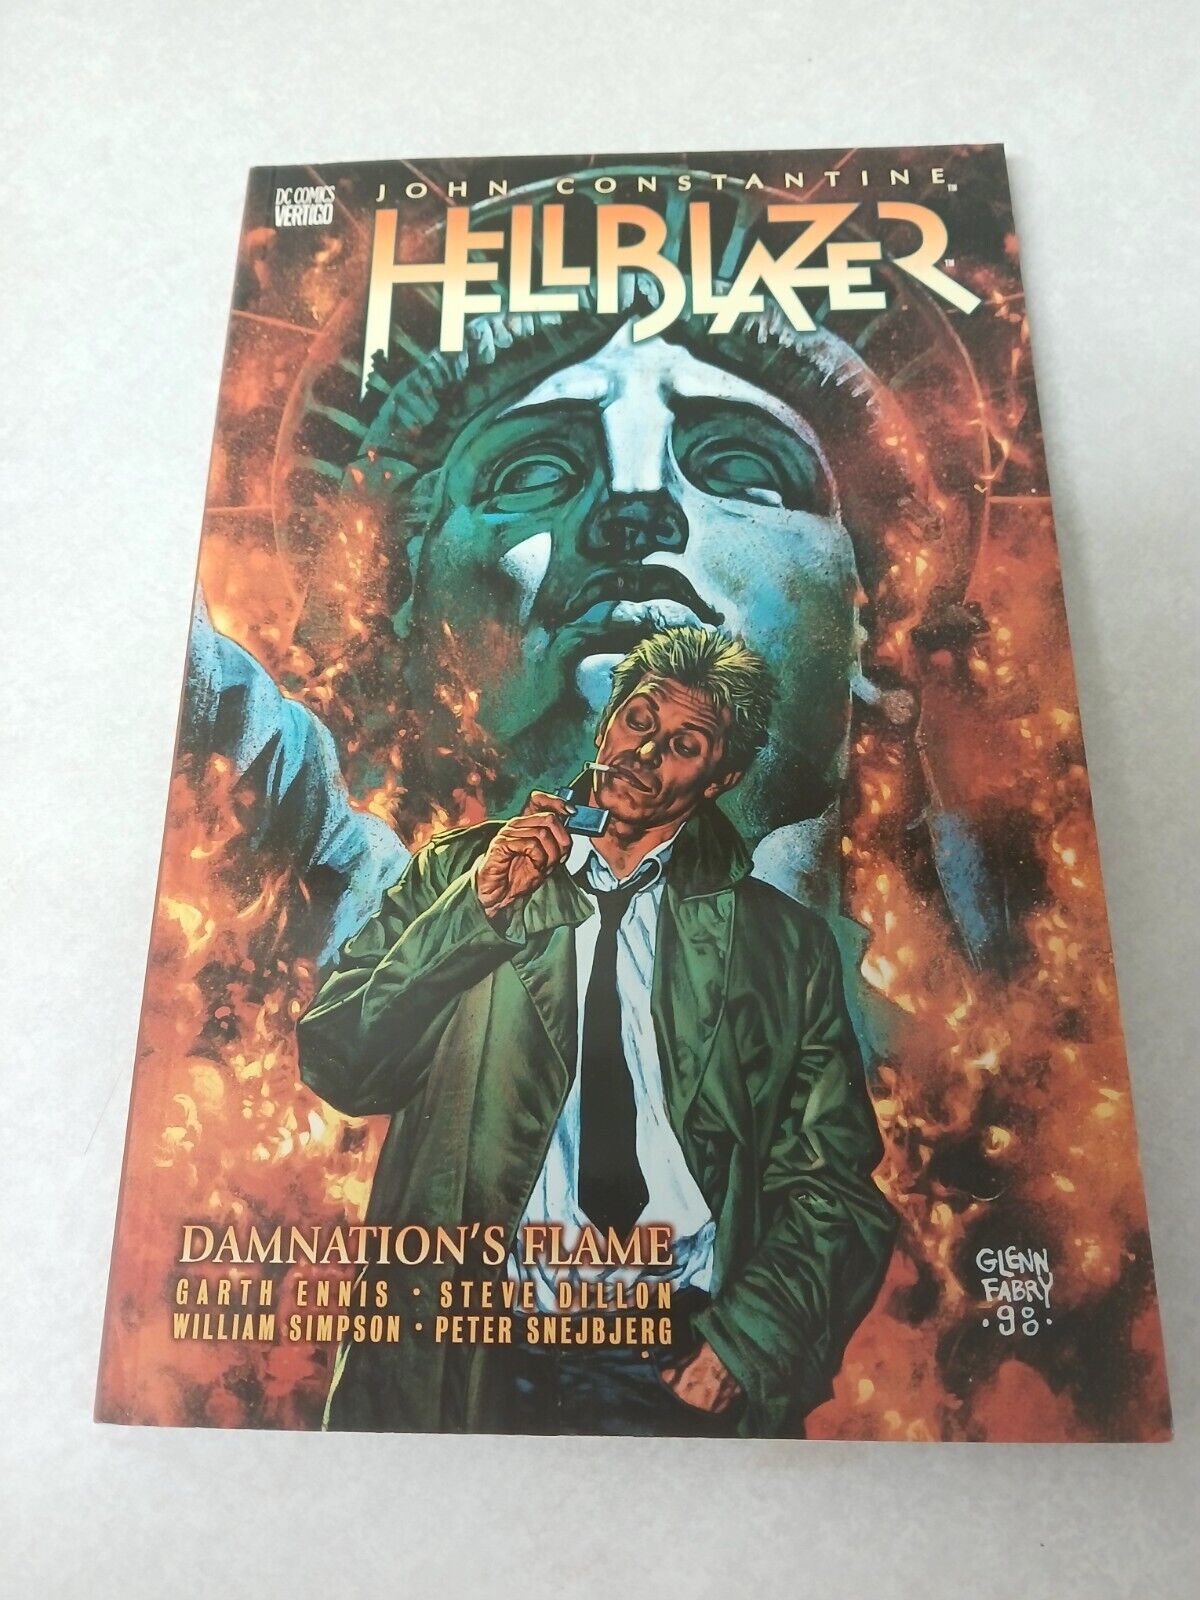 John Constantine, Hellblazer: Damnation's Flame (DC Comics July 1999)